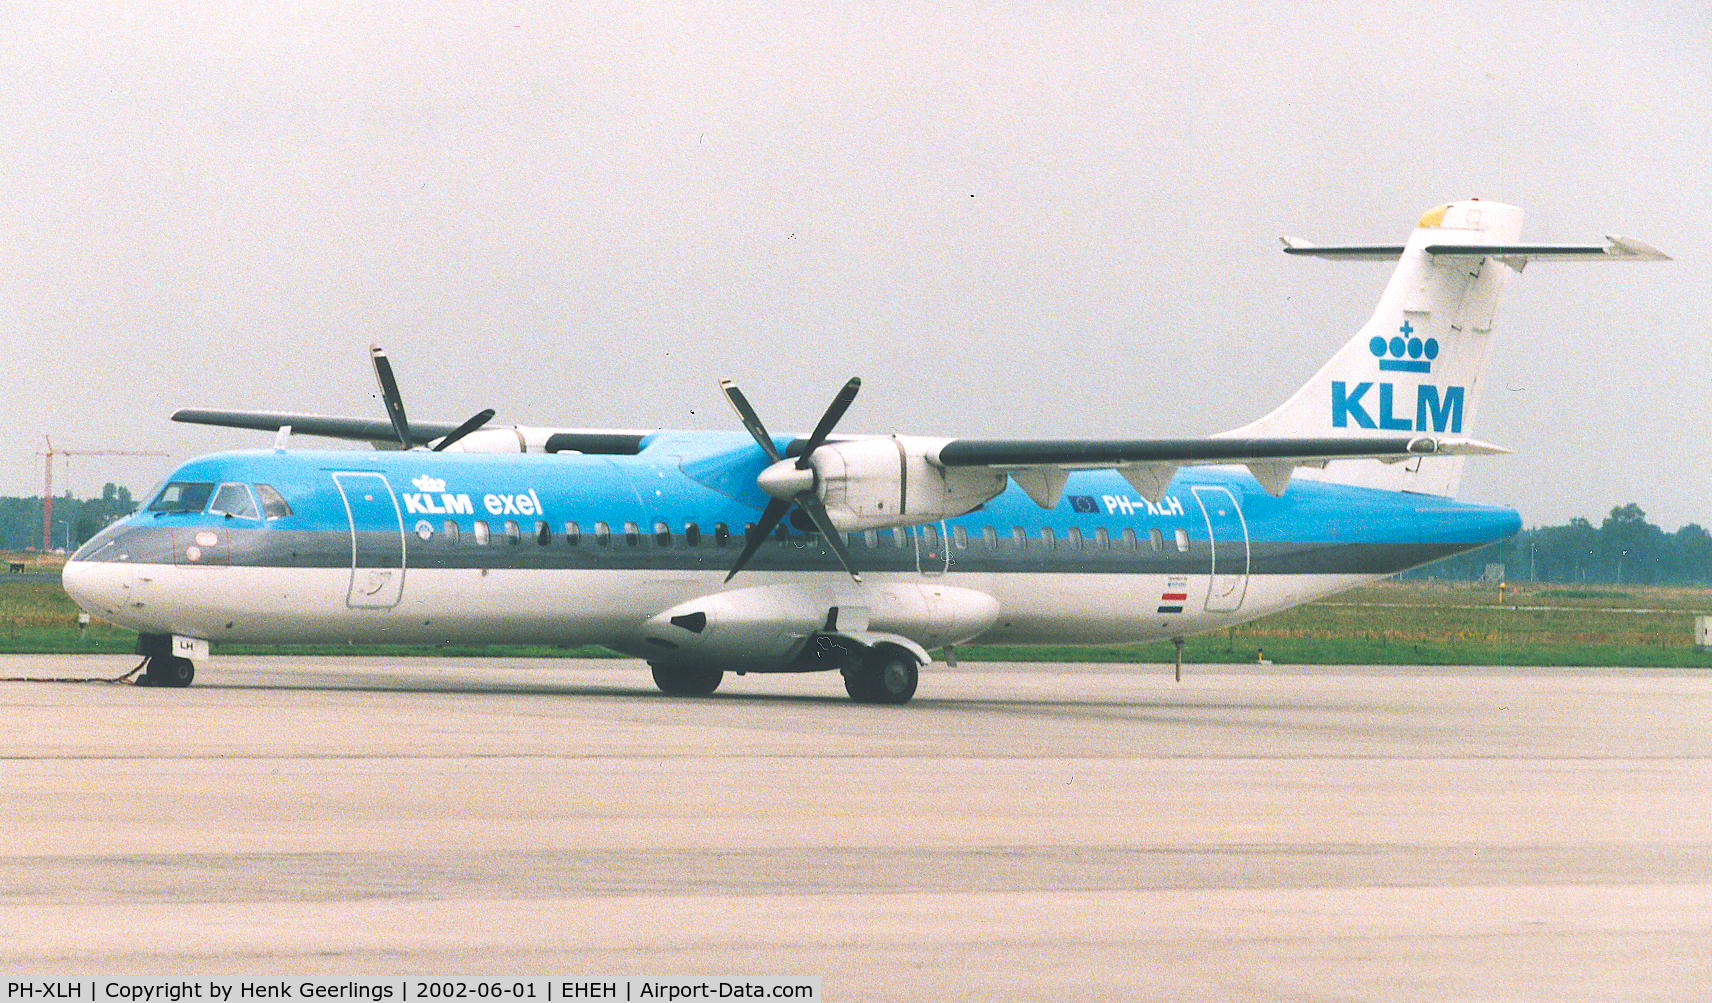 PH-XLH, 1988 ATR 42-320 C/N 093, KLM EXEL